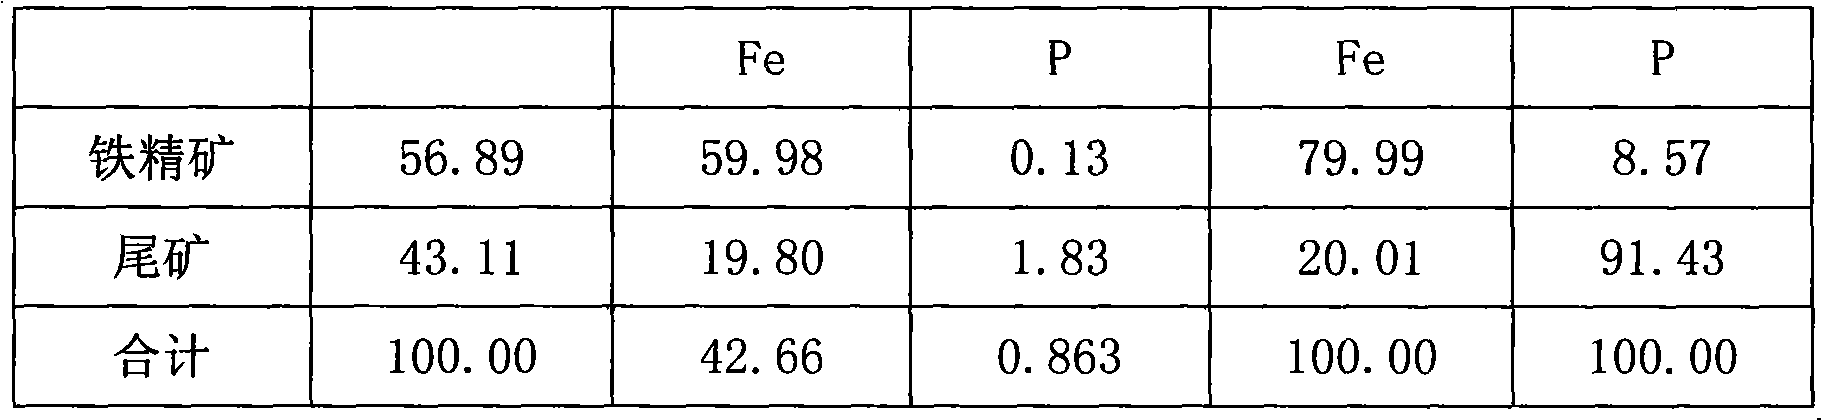 Method for reducing phosphorus in high phosphorus haematite or hematite and limonite ore by magnetization roasting-leaching method